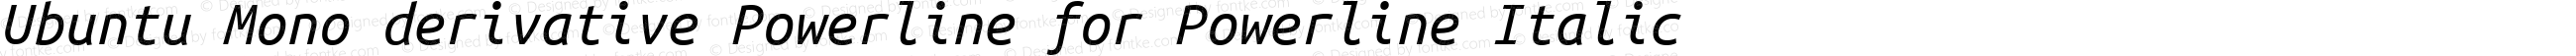 Ubuntu Mono derivative Powerline Italic for Powerline